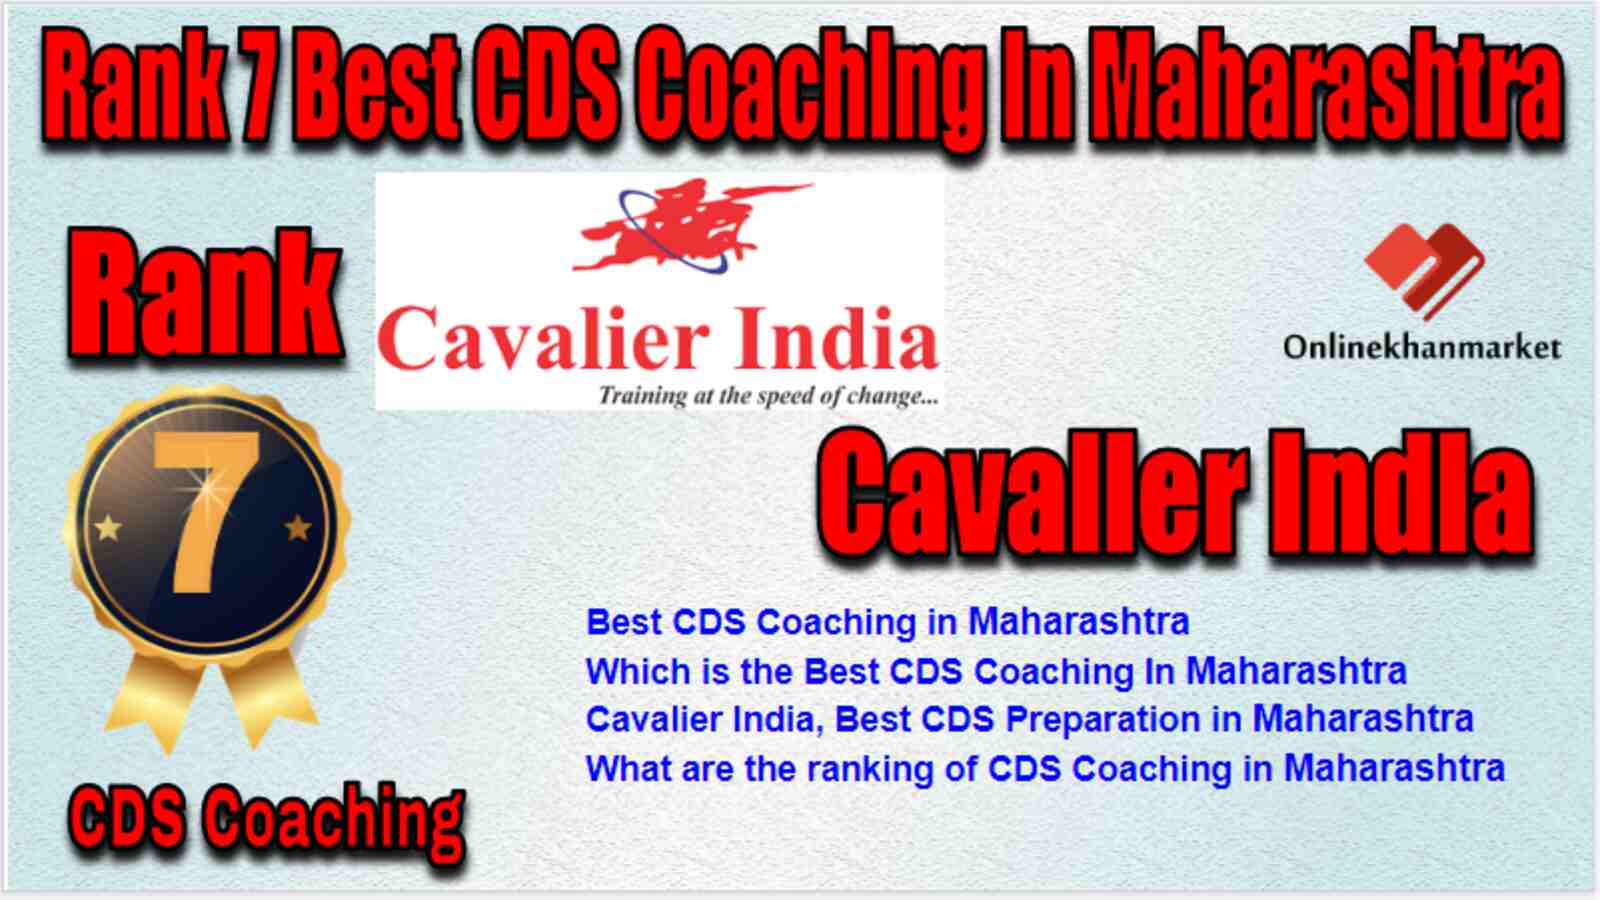 Rank 7 Best CDS Coaching in Maharashtra